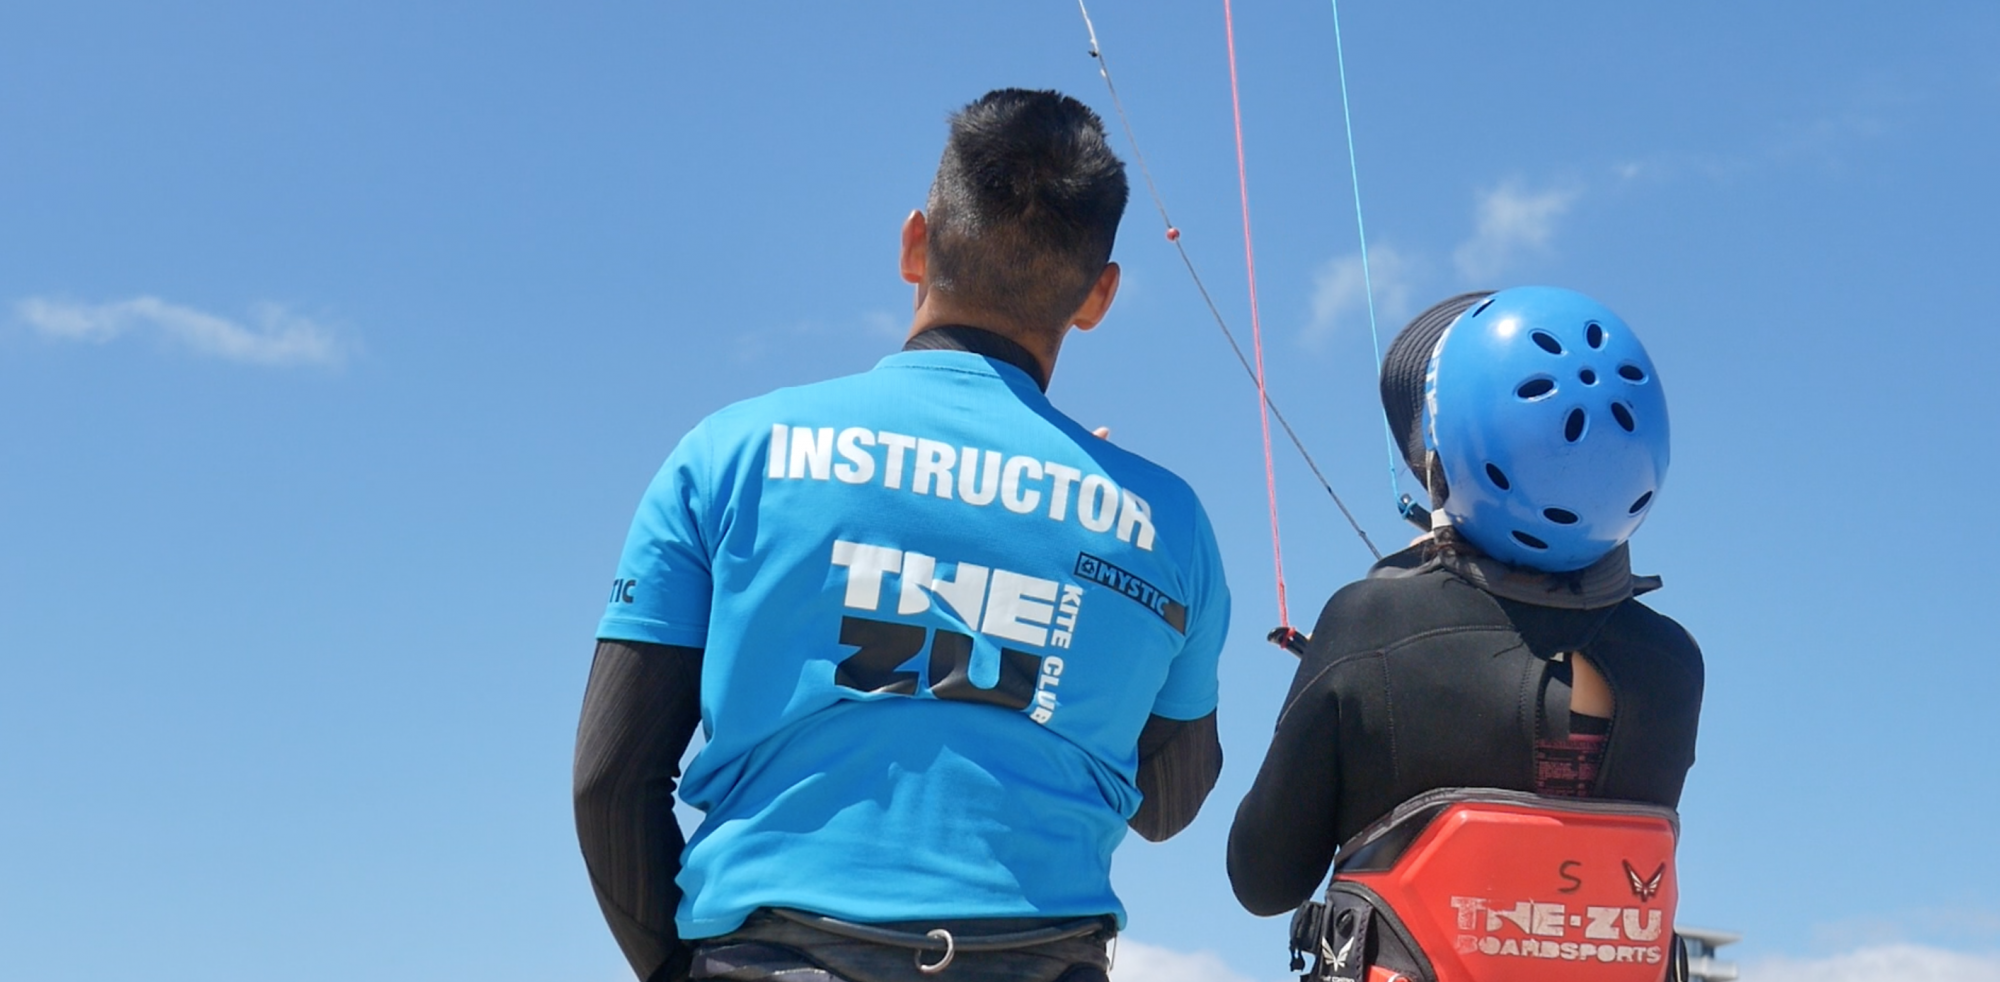 Trainer kite lesson on beach